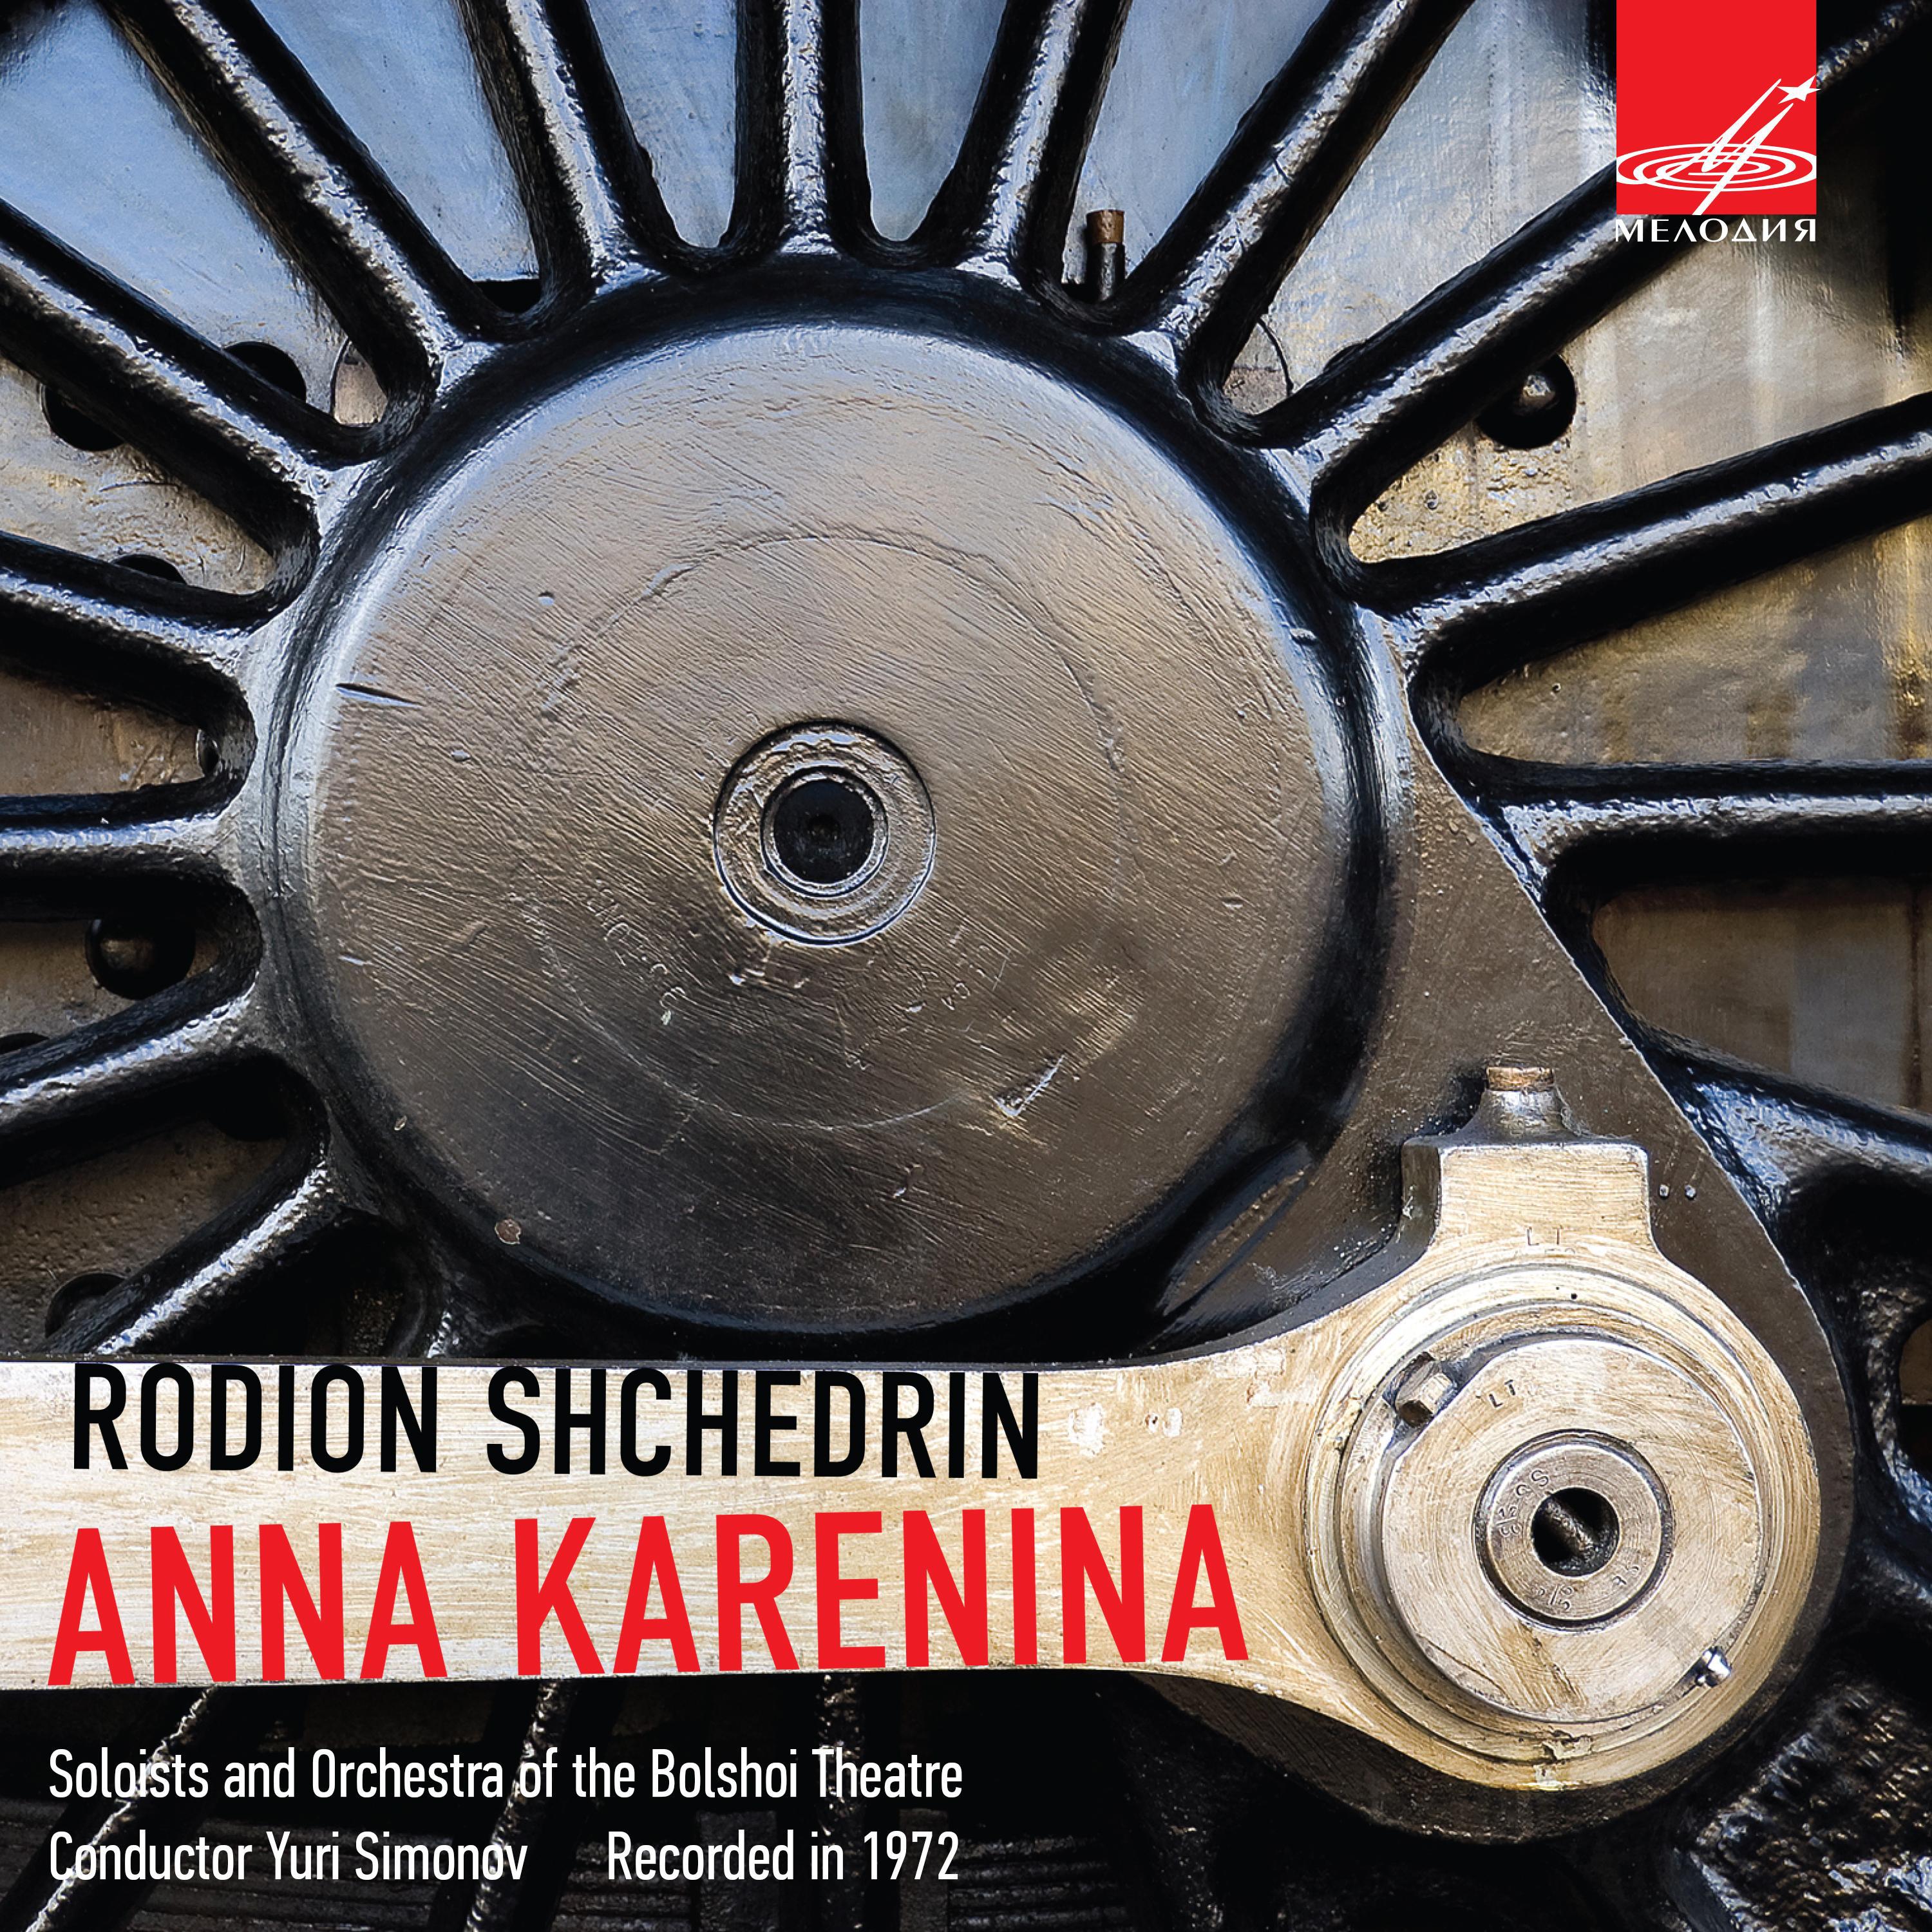 Rodion Shchedrin - Anna Karenina, Act III: Palace Ceremonial